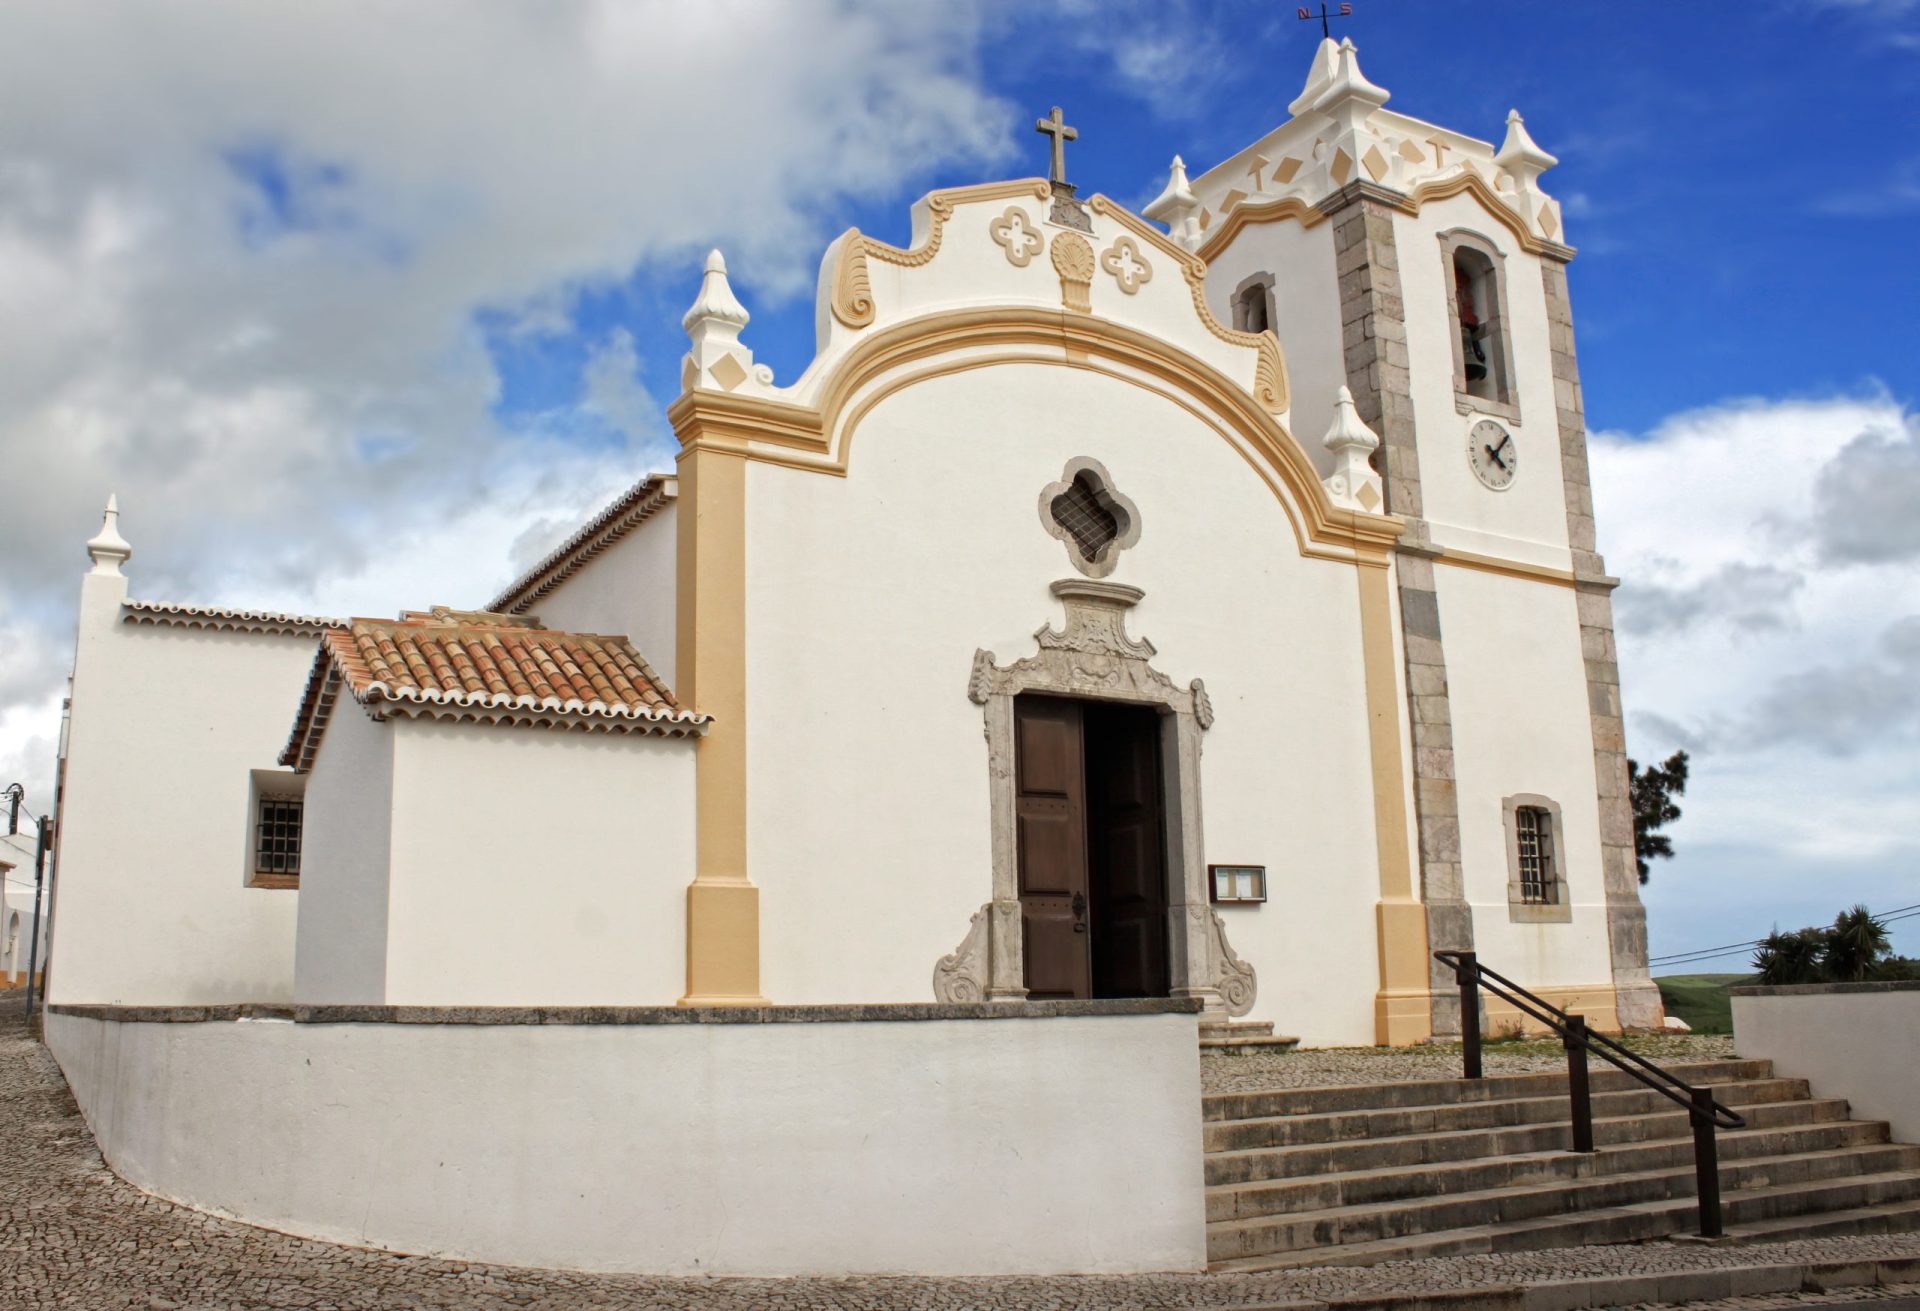 Vila do Bispo vence prémio Município do Ano Portugal 2015